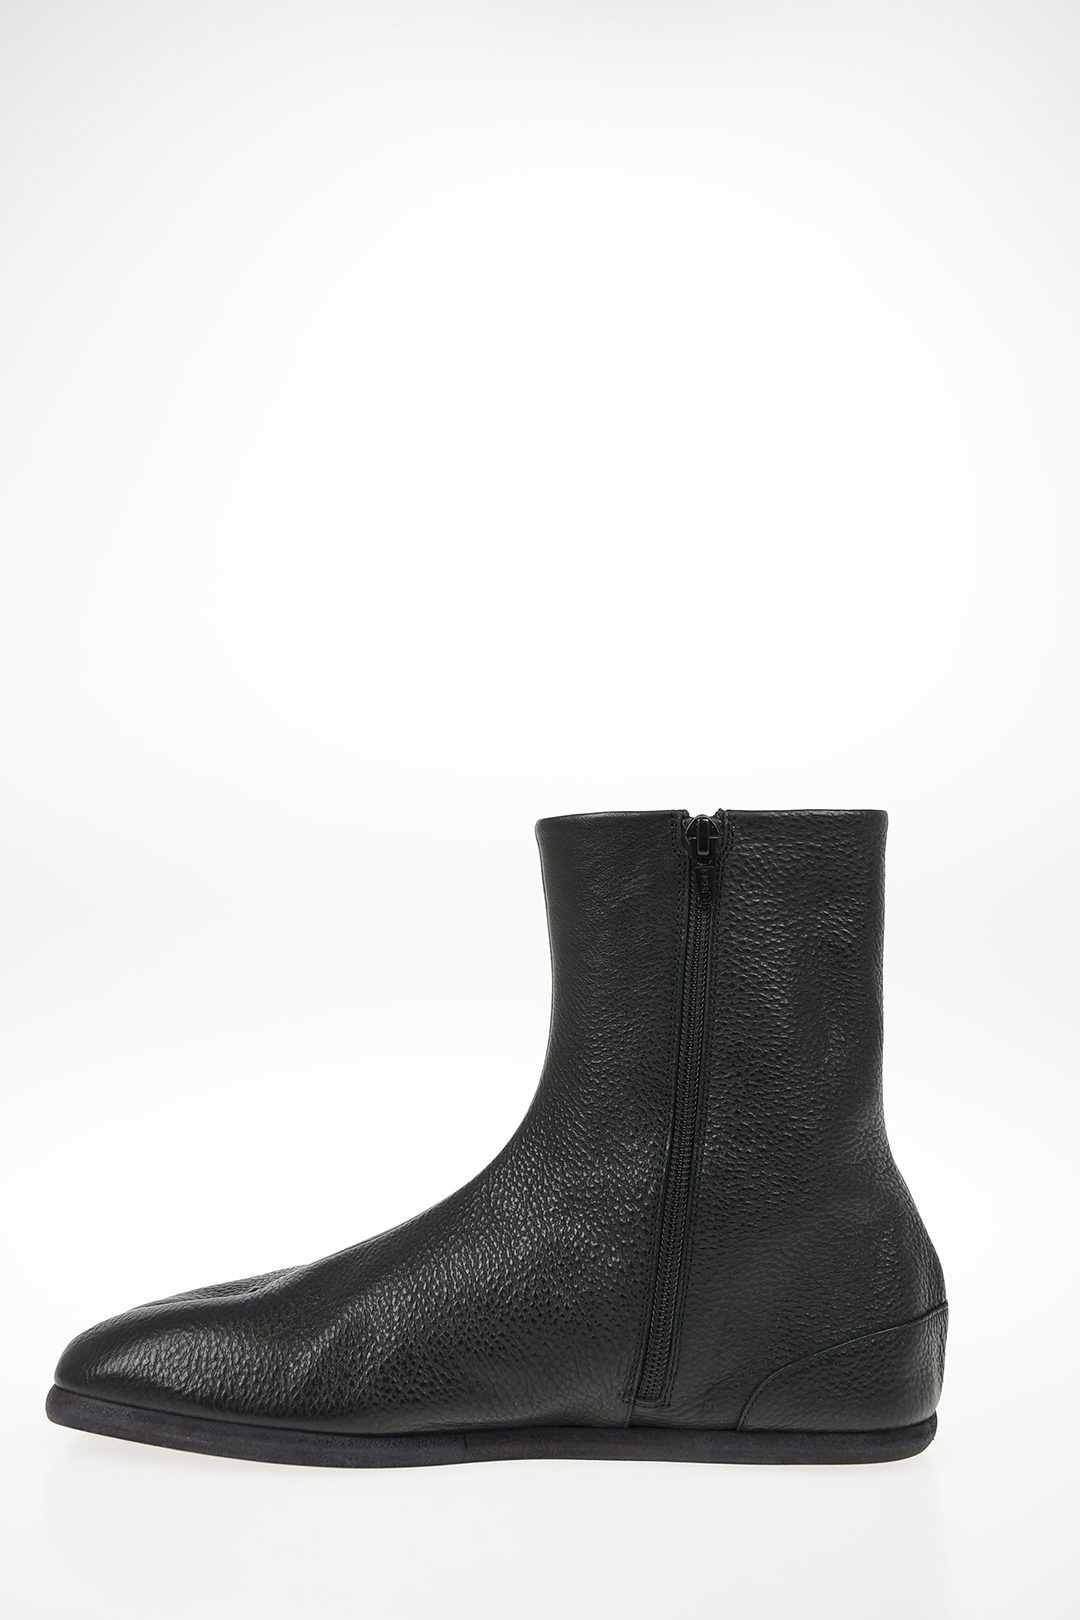 Maison Margiela MM22 Leather TABI Ankle Boot men - Glamood Outlet